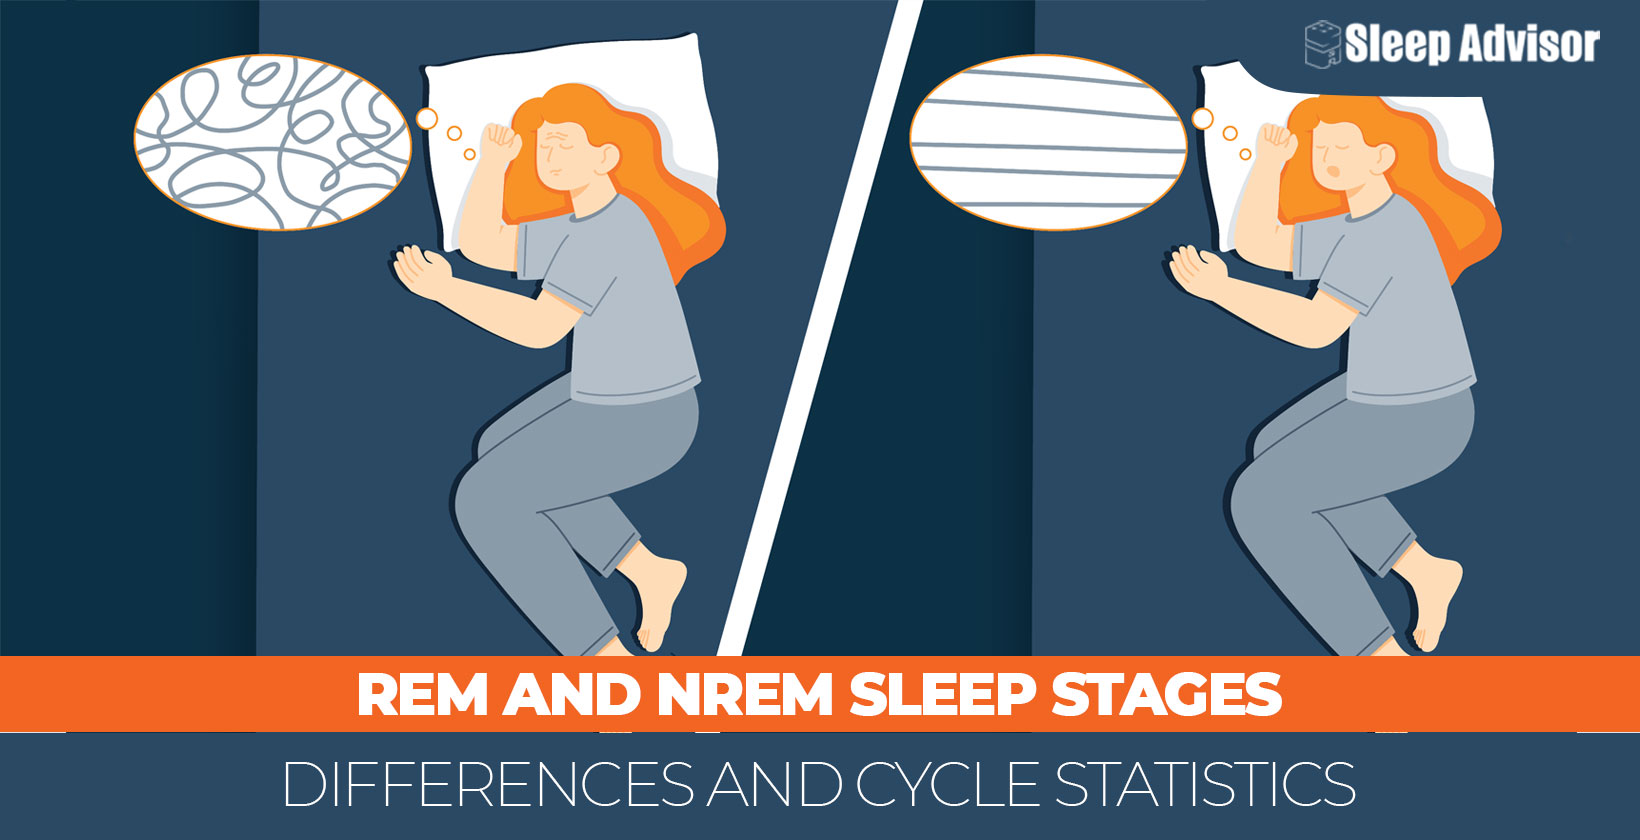 REM and NREM sleep